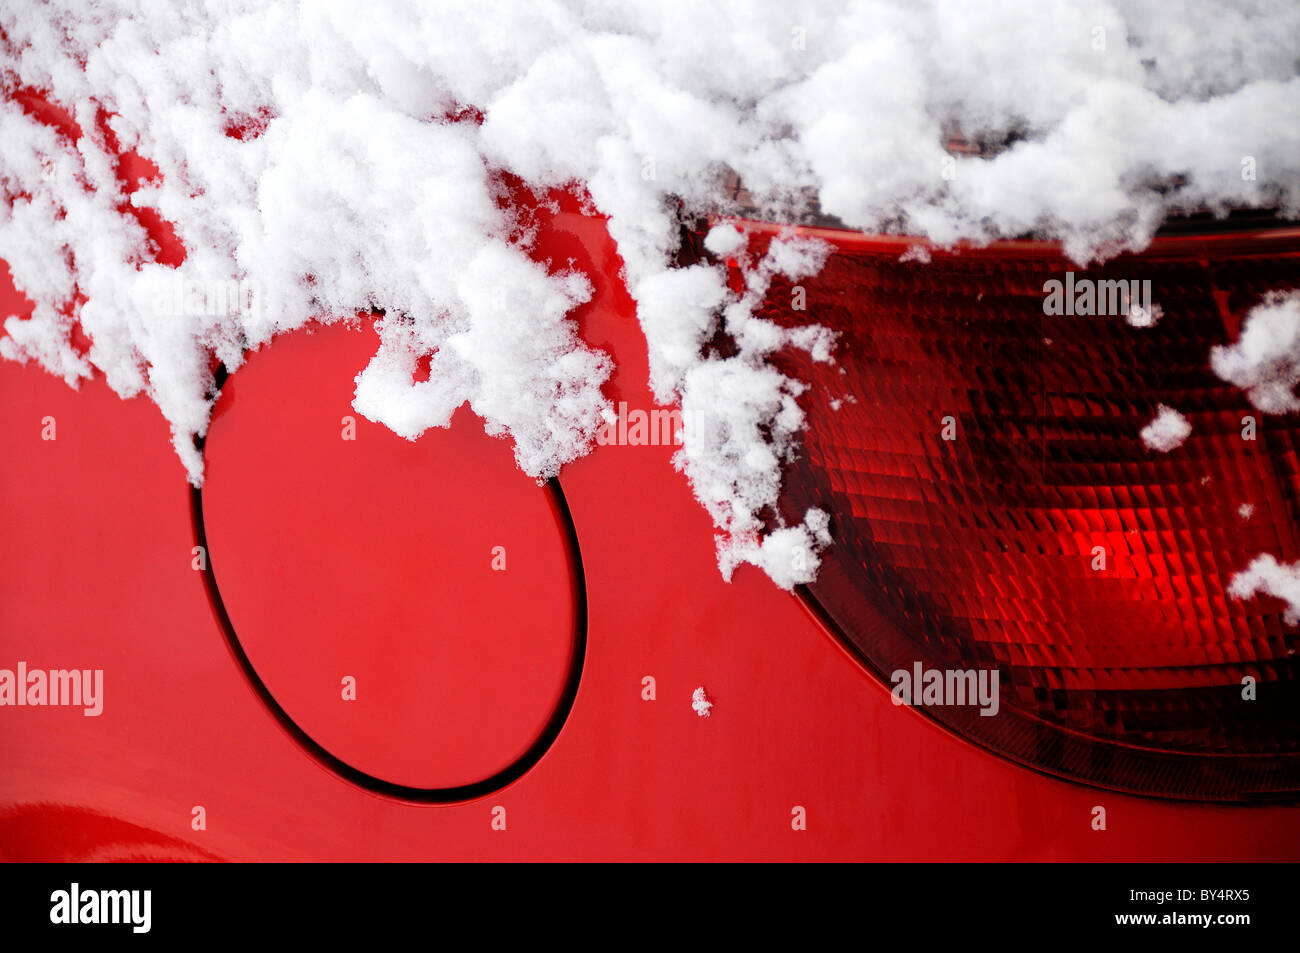 petrol cap of red car in snow Stock Photo